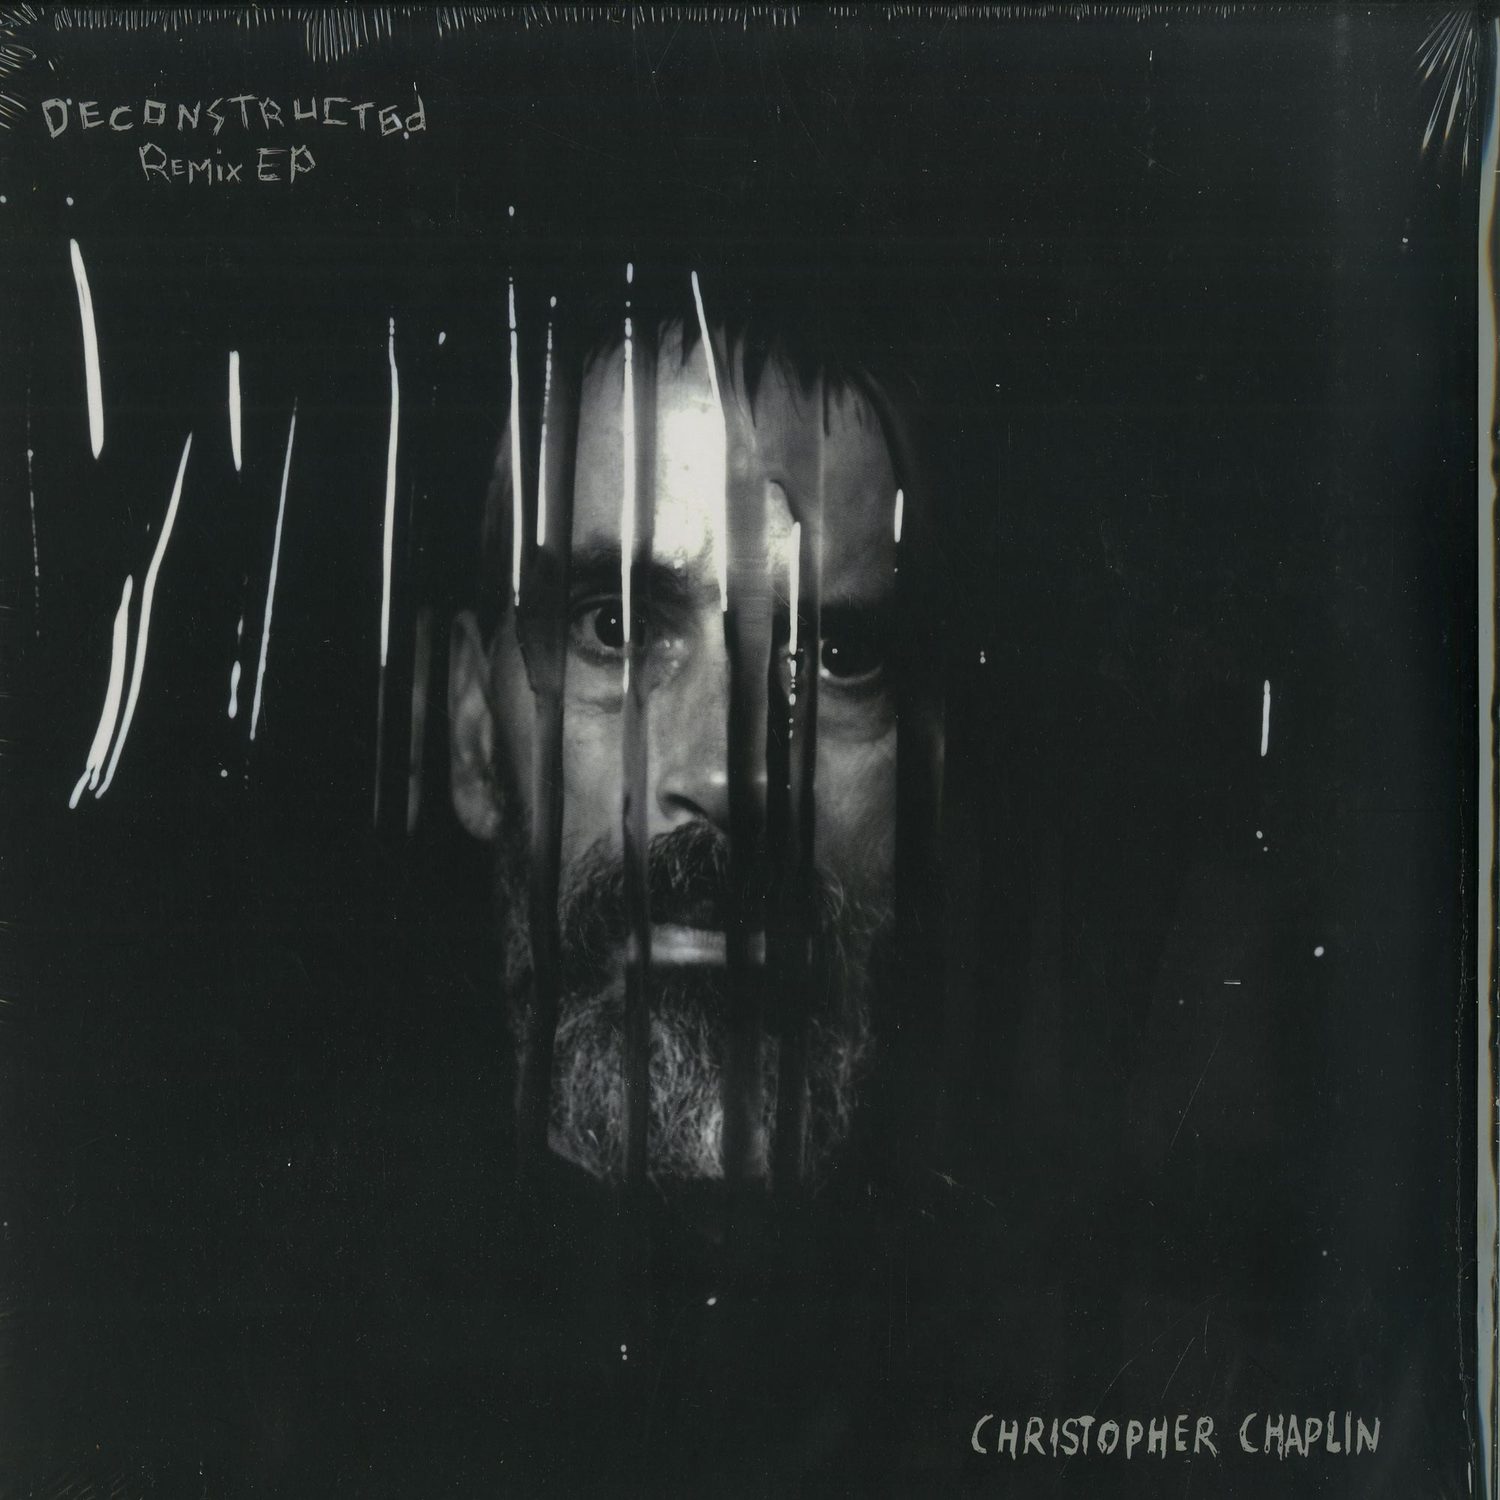 Christopher Chaplin - DECONSTRUCTED - REMIX EP